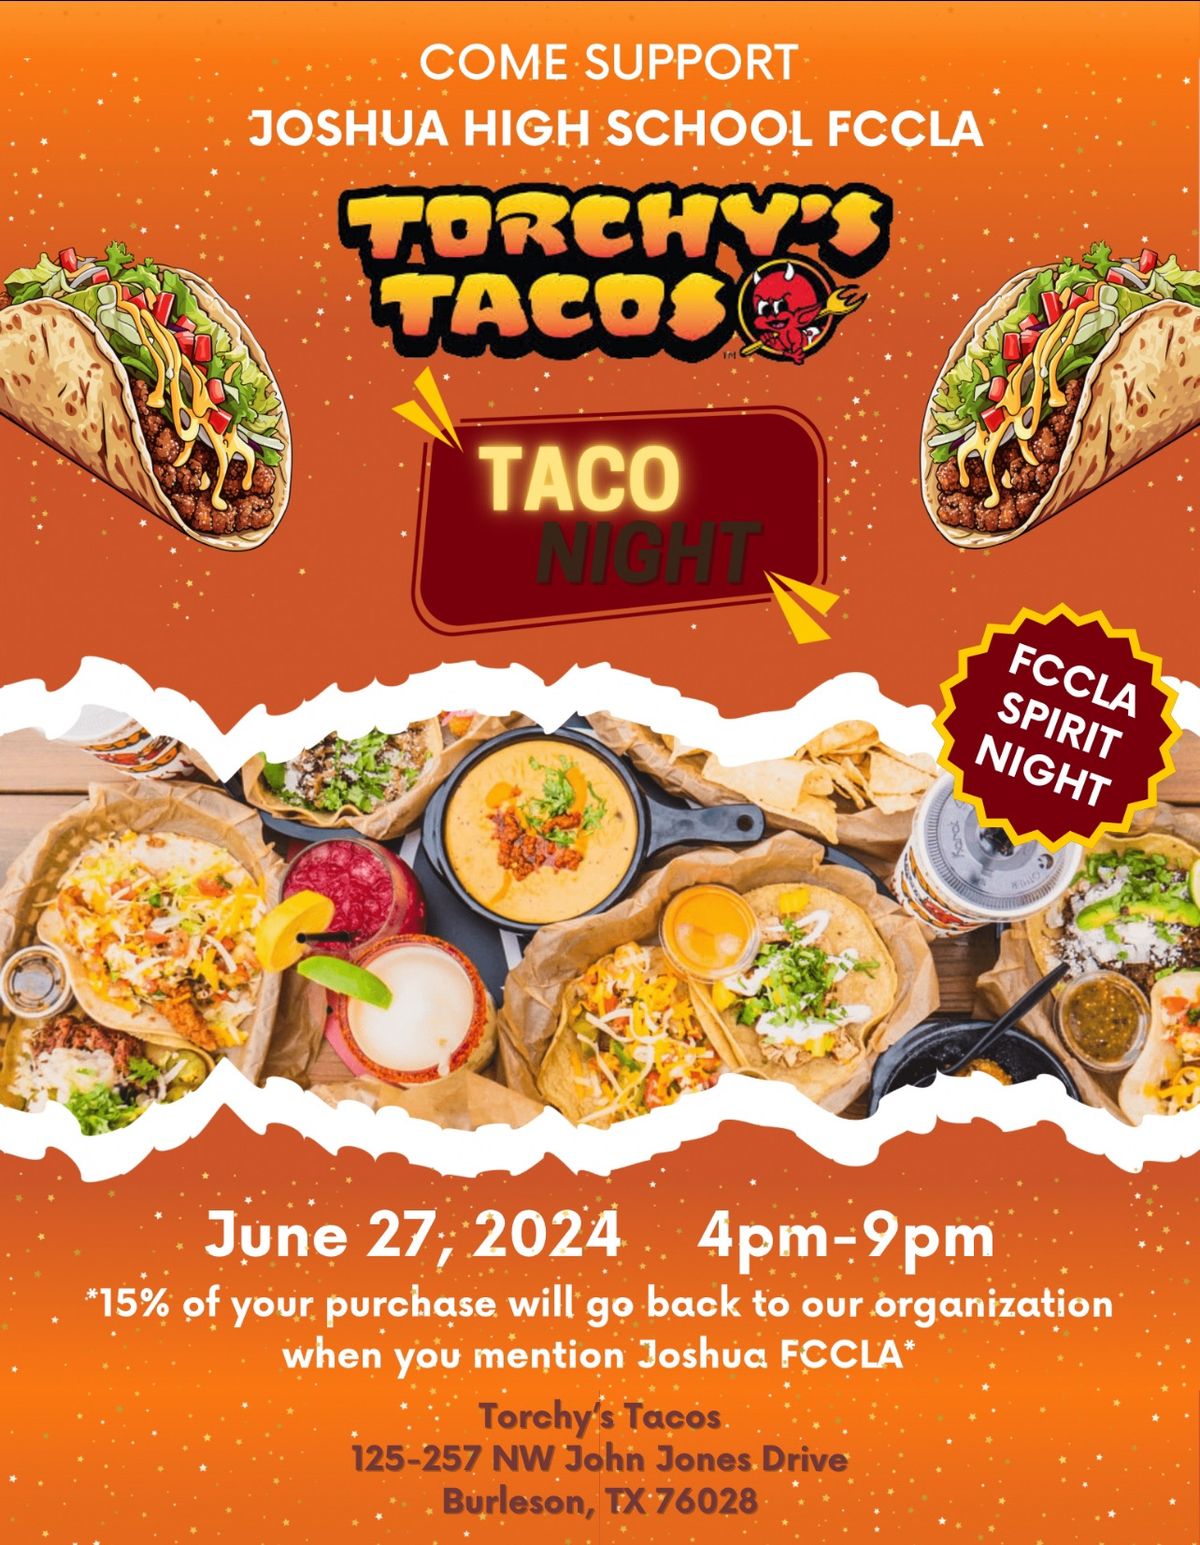 Torchy's Tacos FCCLA Spirit Night